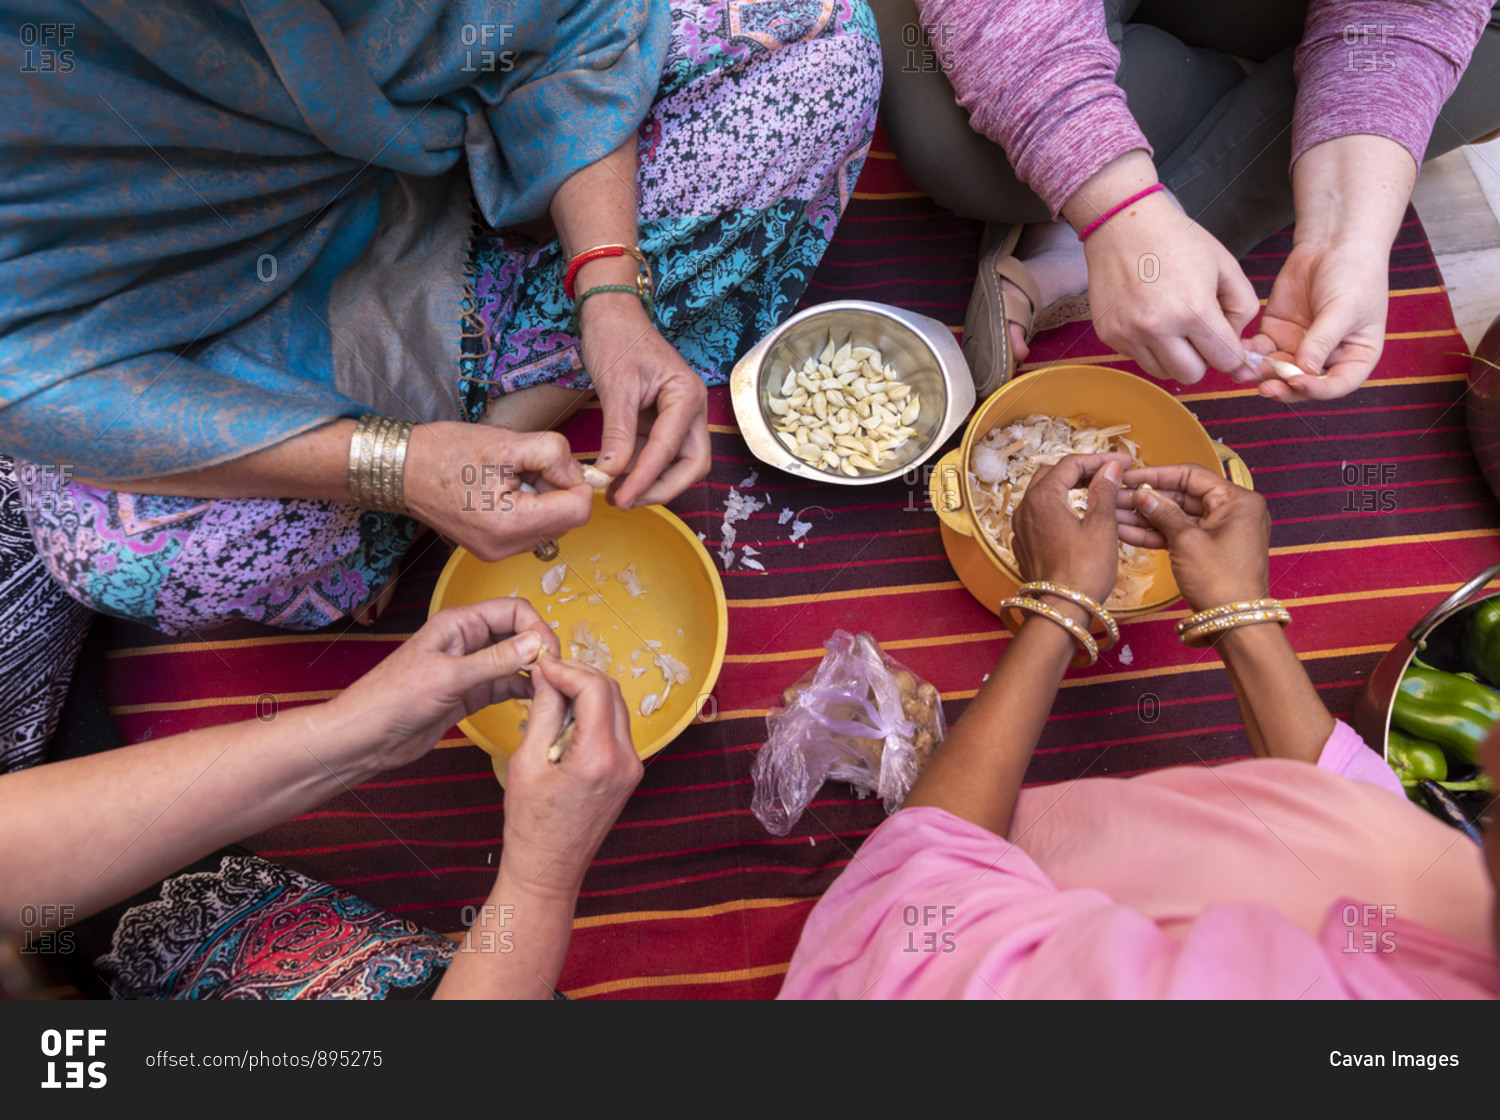 A detail shot of diverse women's hands preparing garlic..